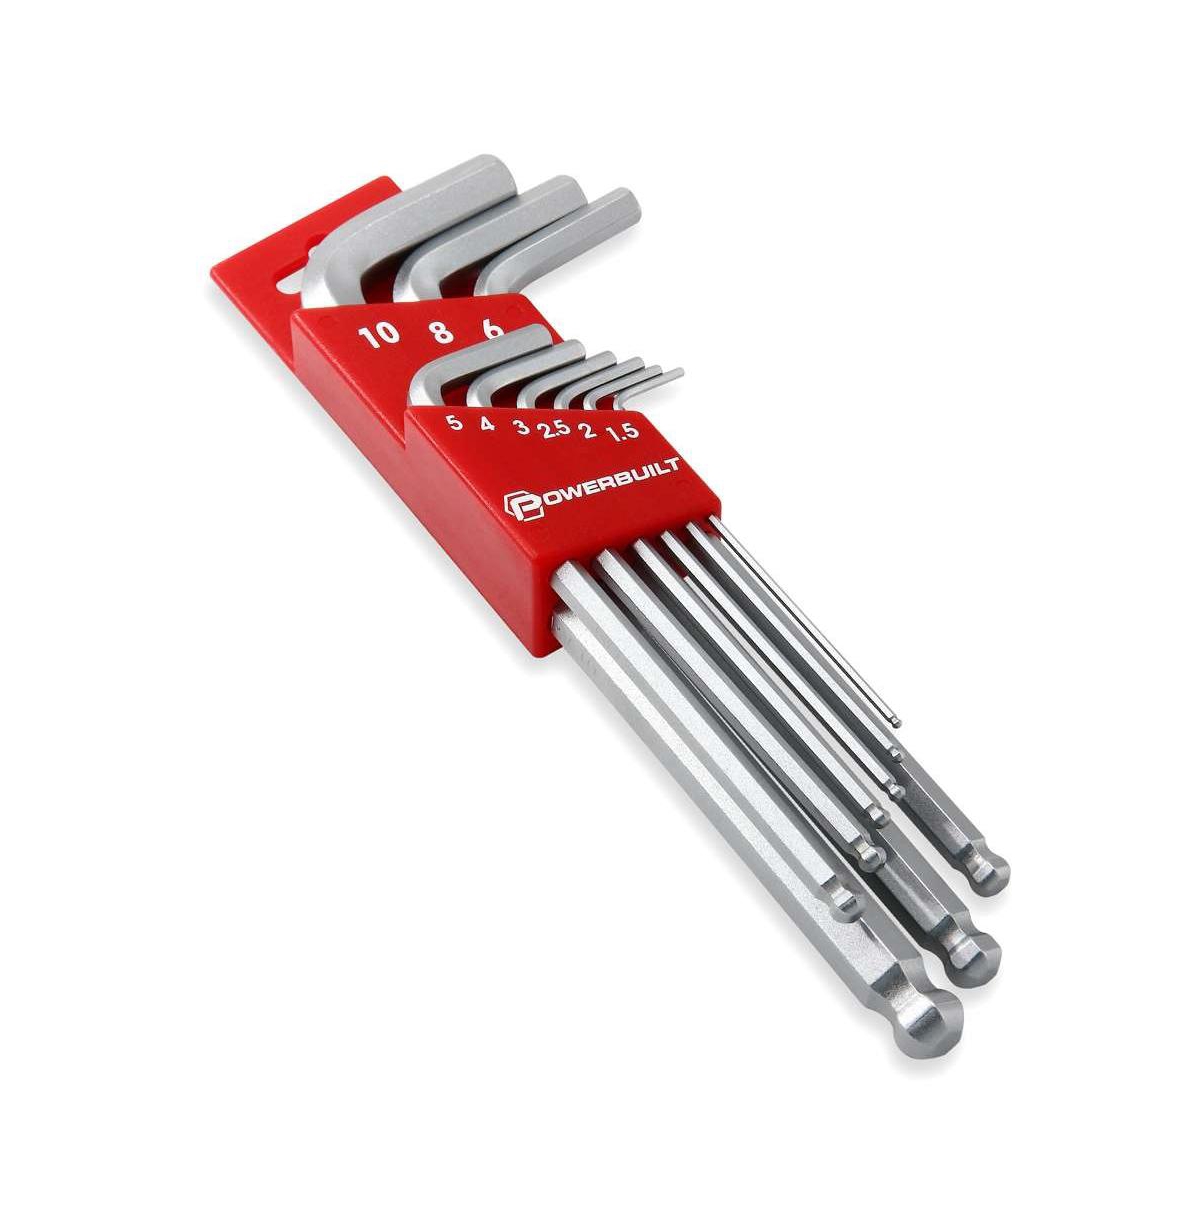 9 Piece Metric Long Arm Hex Key Wrench Set - Silver